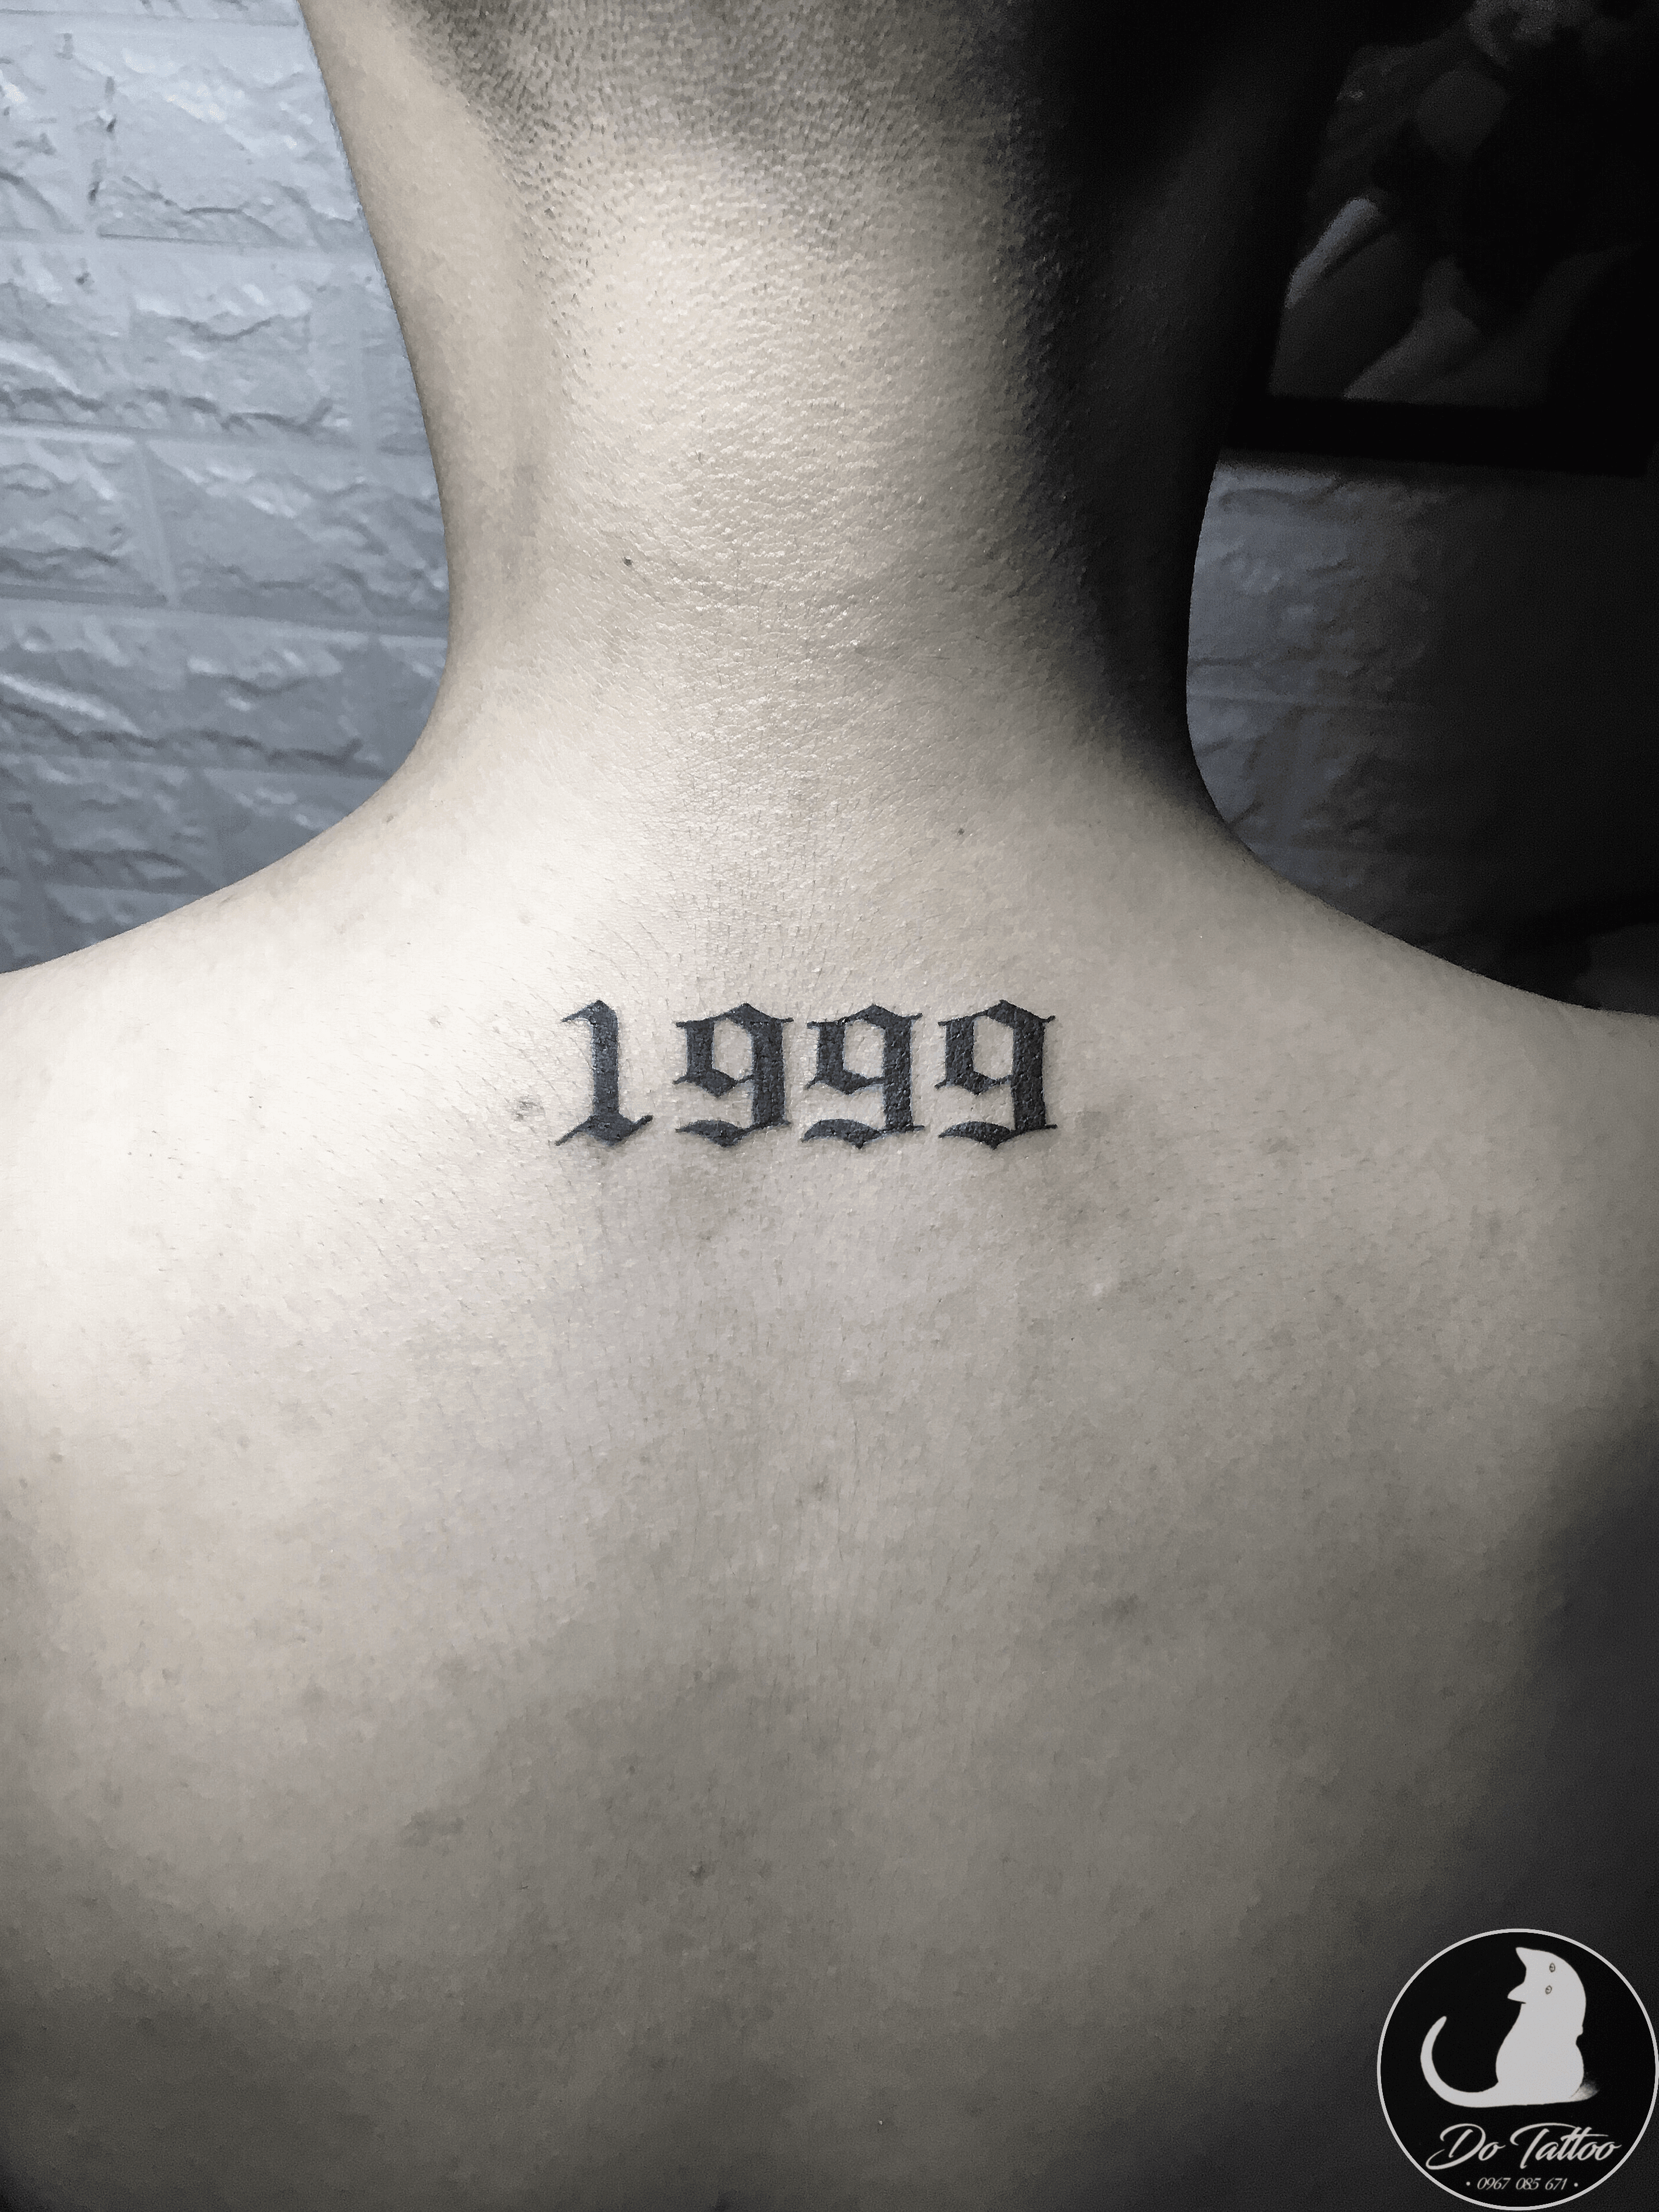 birth 1999 cool tattoos tatted blackink tattooed oldenglish book  now season  Tattoo designs Small chest tattoos Tattoo lettering styles